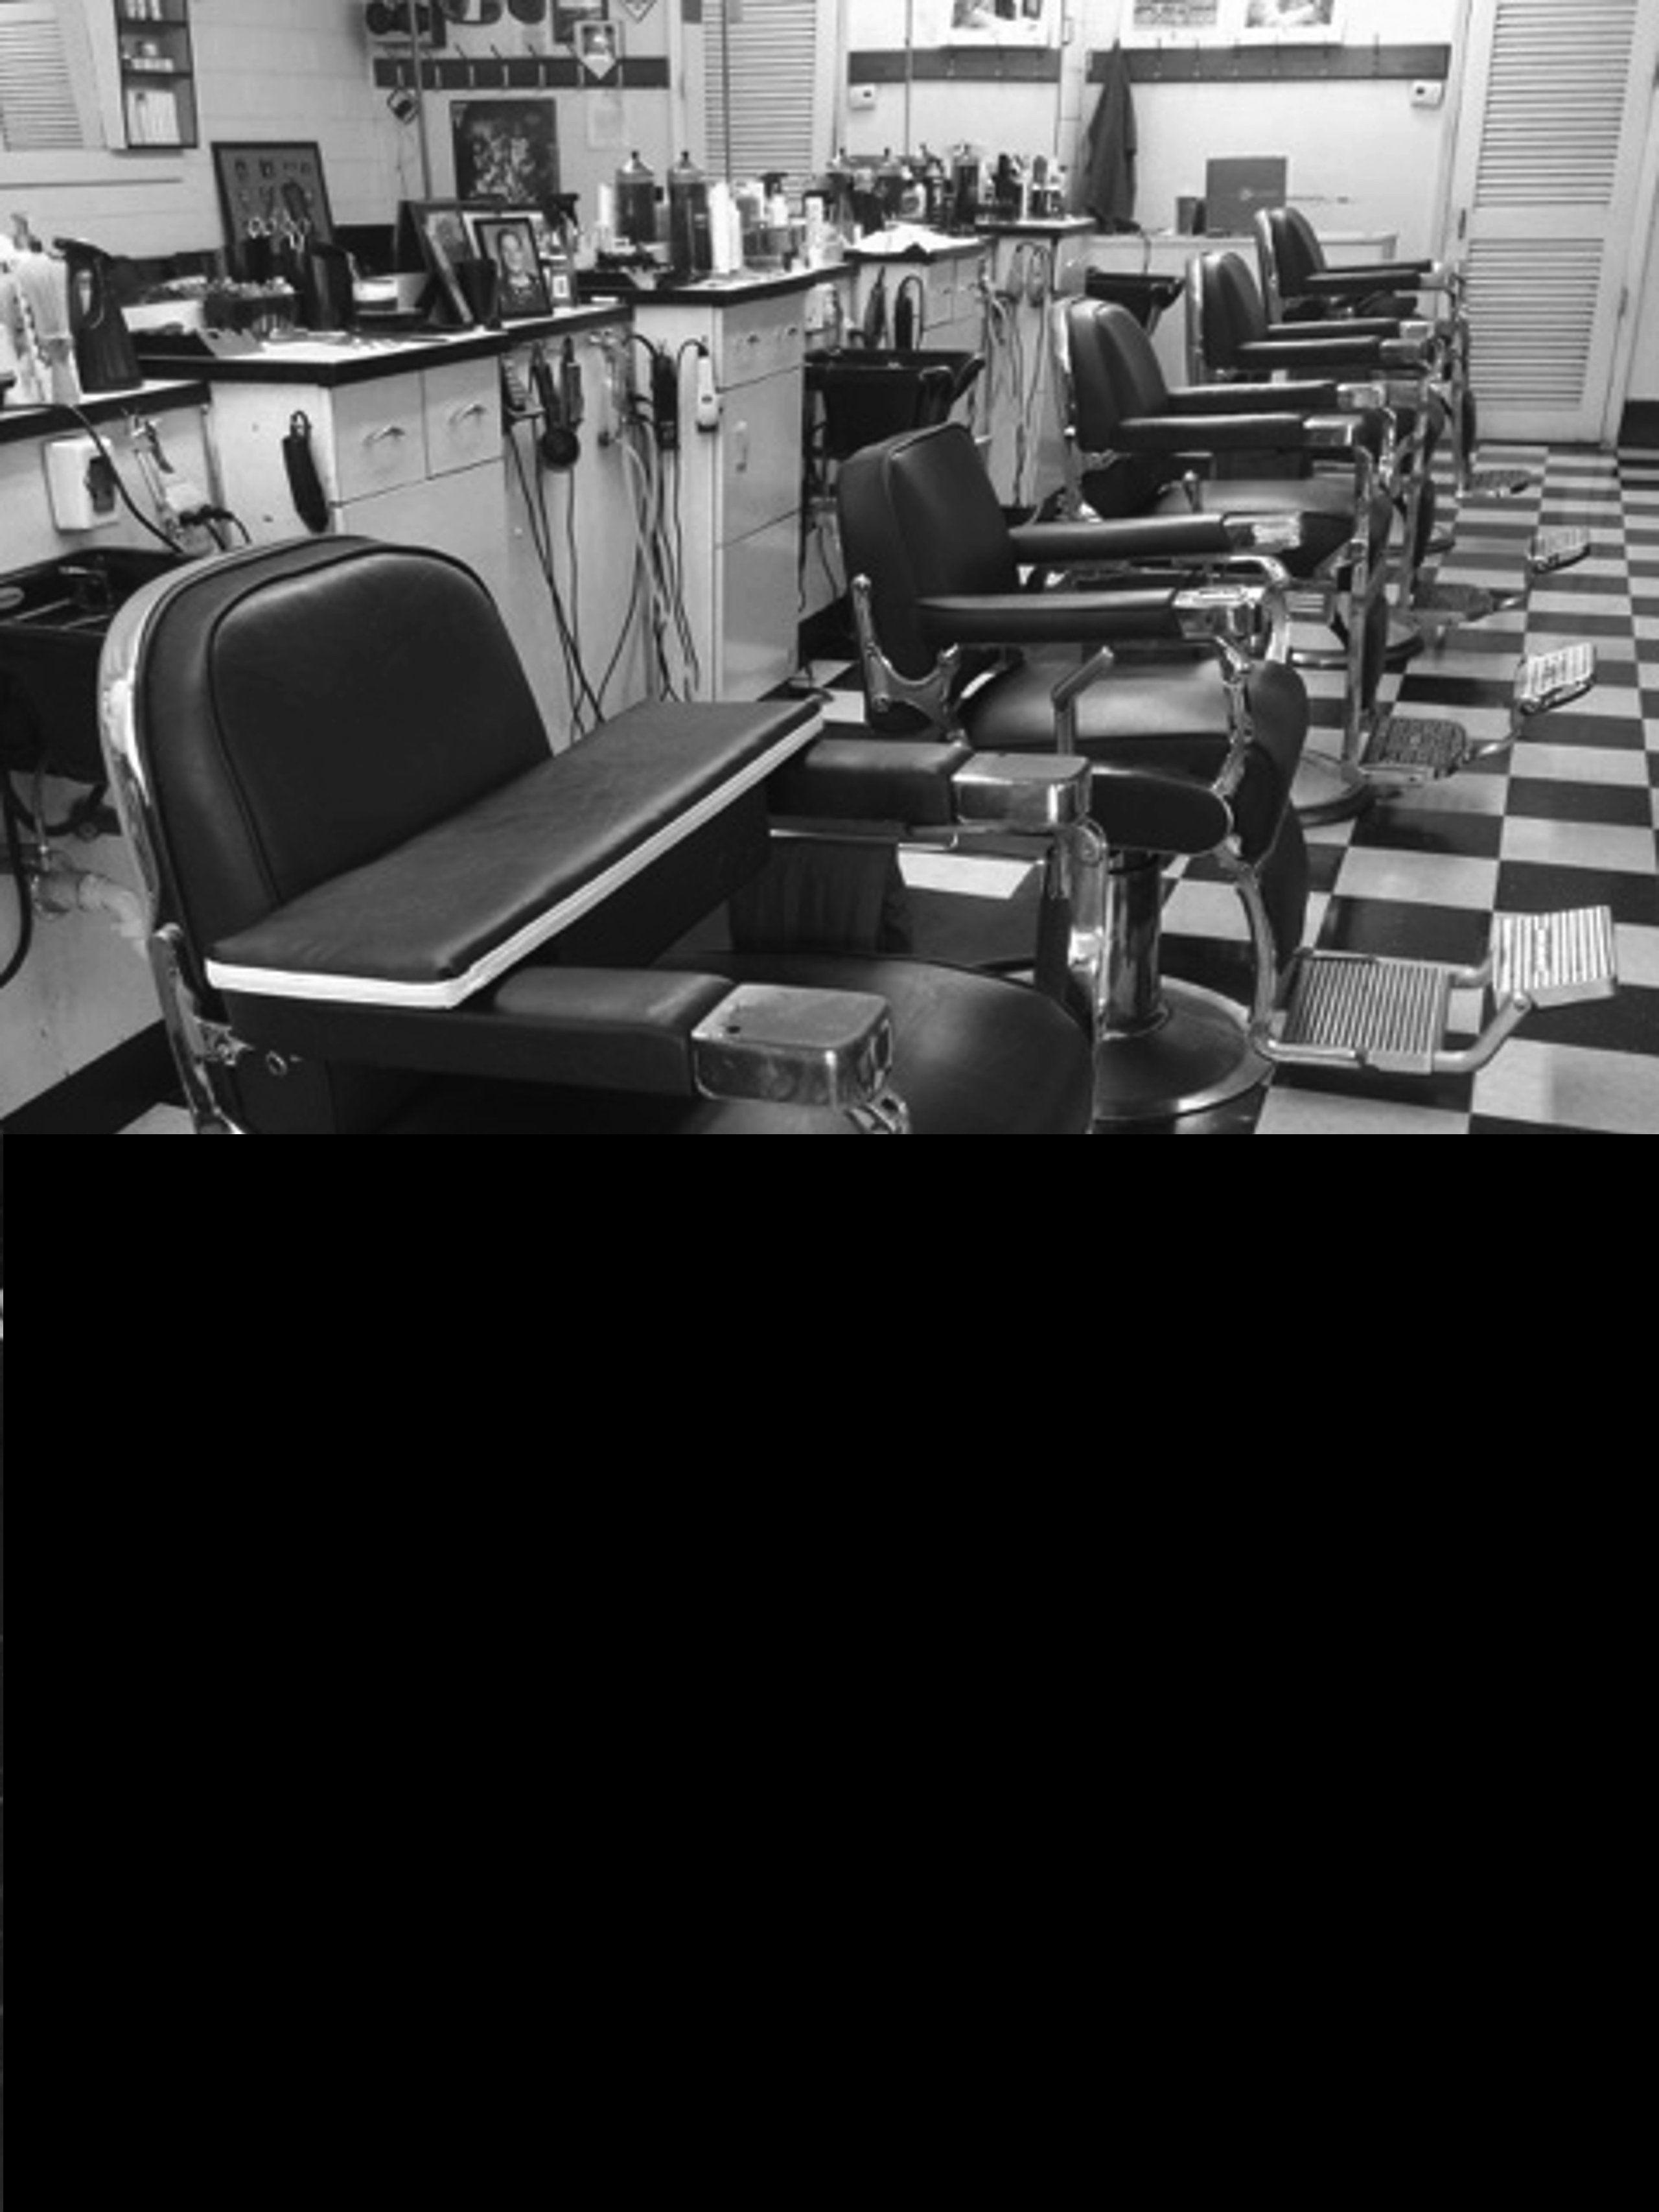 The Man-Mur Barbershop